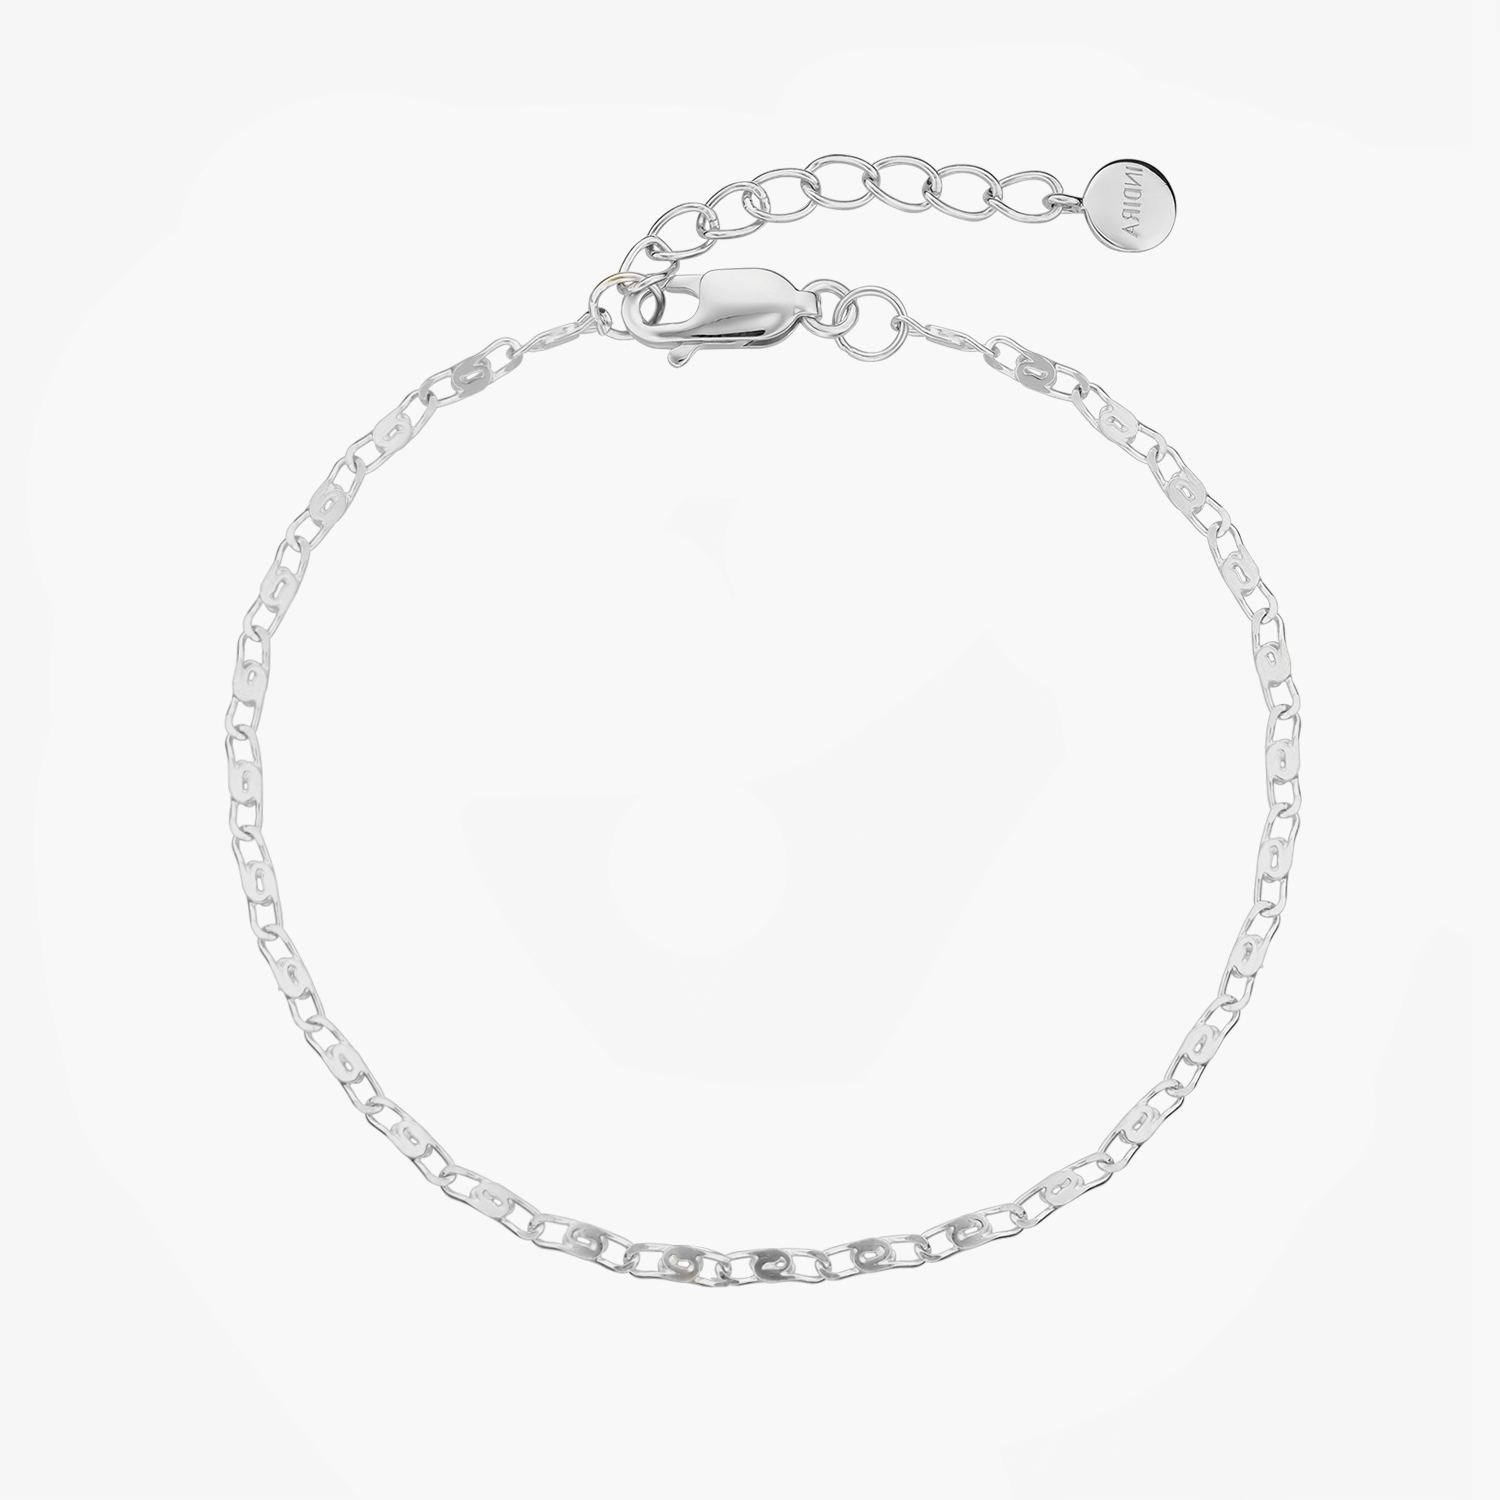 Anchor silver bracelet